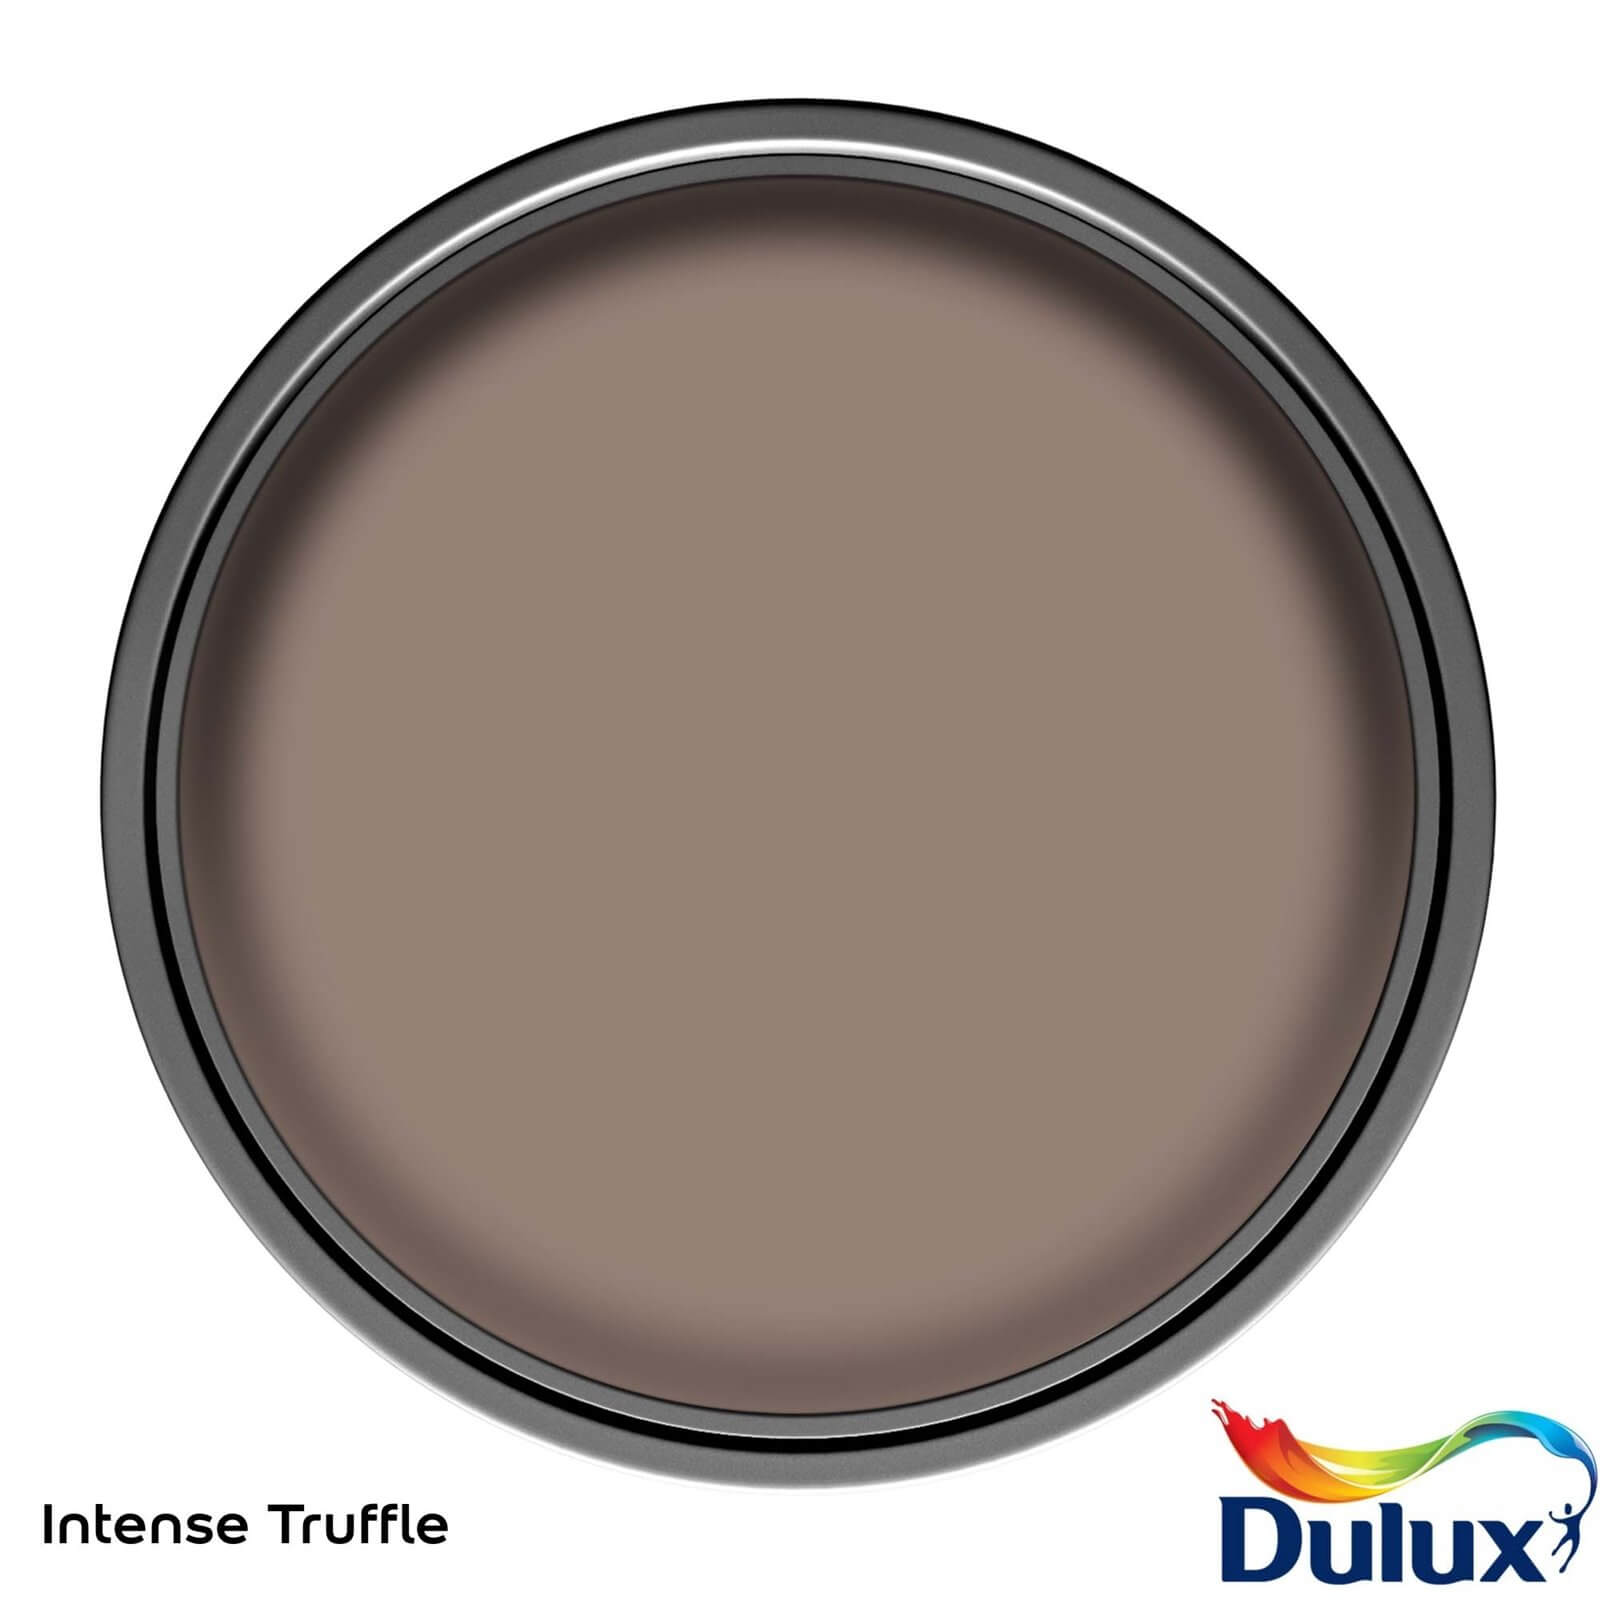 Dulux Once Intense Truffle - Matt Paint - 2.5L